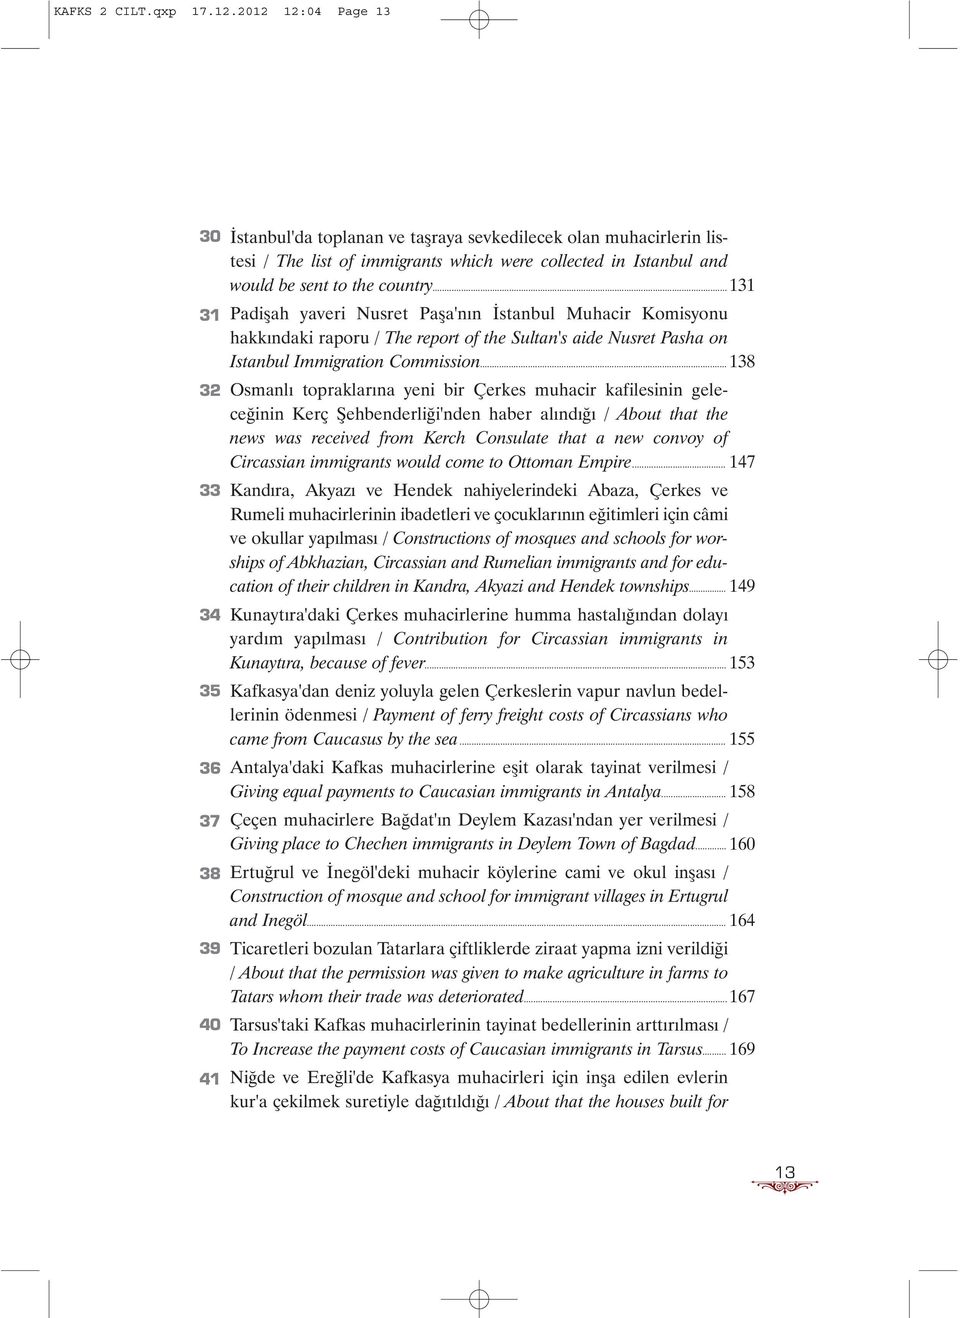 .. 131 31 Padiþah yaveri Nusret Paþa'nýn Ýstanbul Muhacir Komisyonu hakkýndaki raporu / The report of the Sultan's aide Nusret Pasha on Istanbul Immigration Commission.